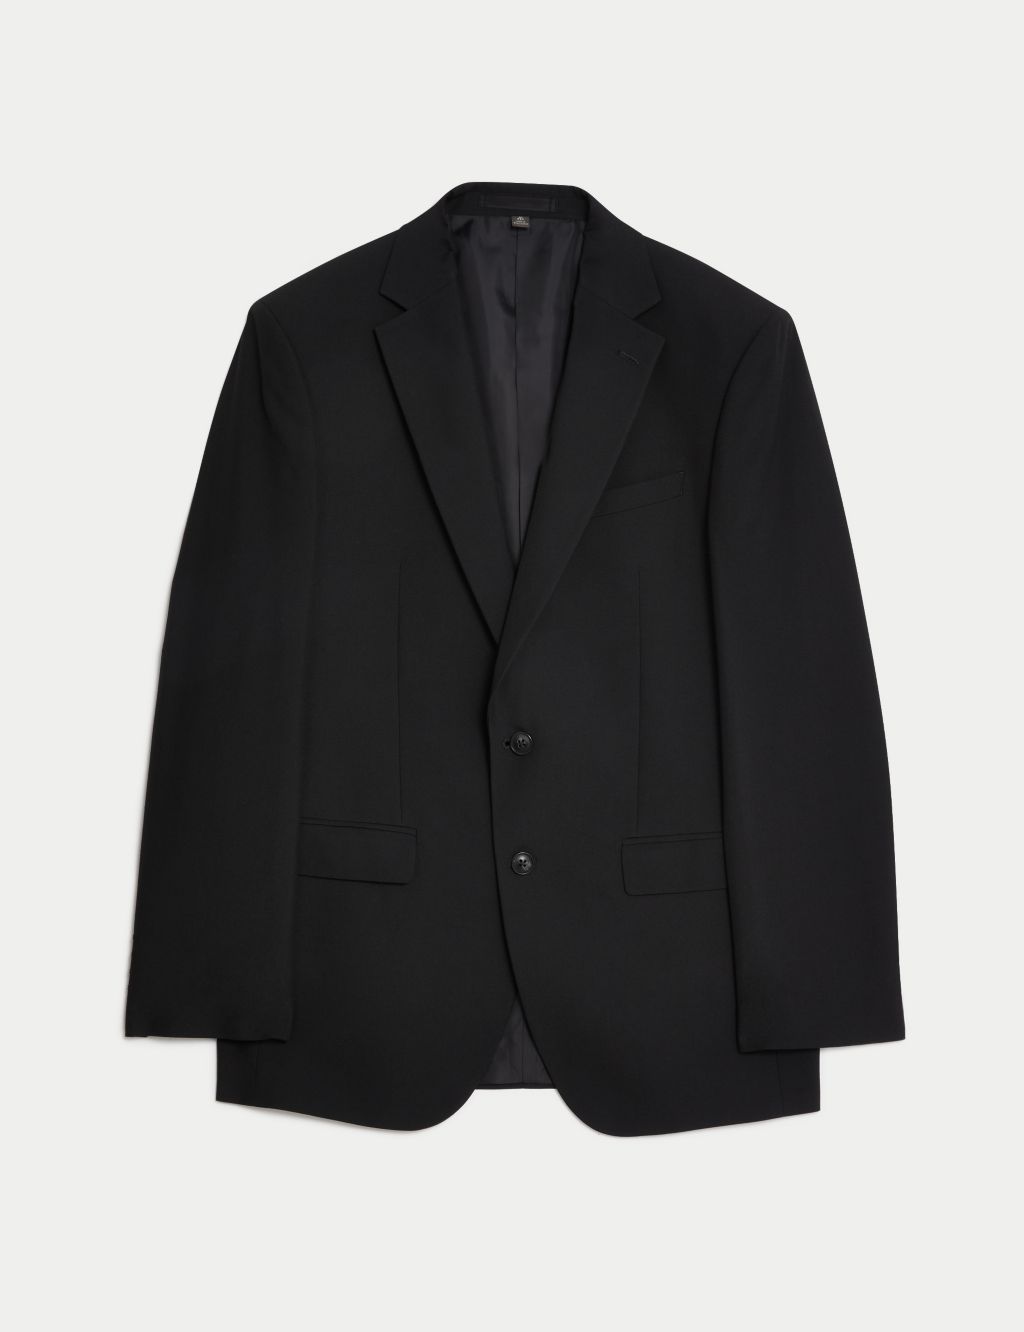 Regular Fit Suit Jacket image 1